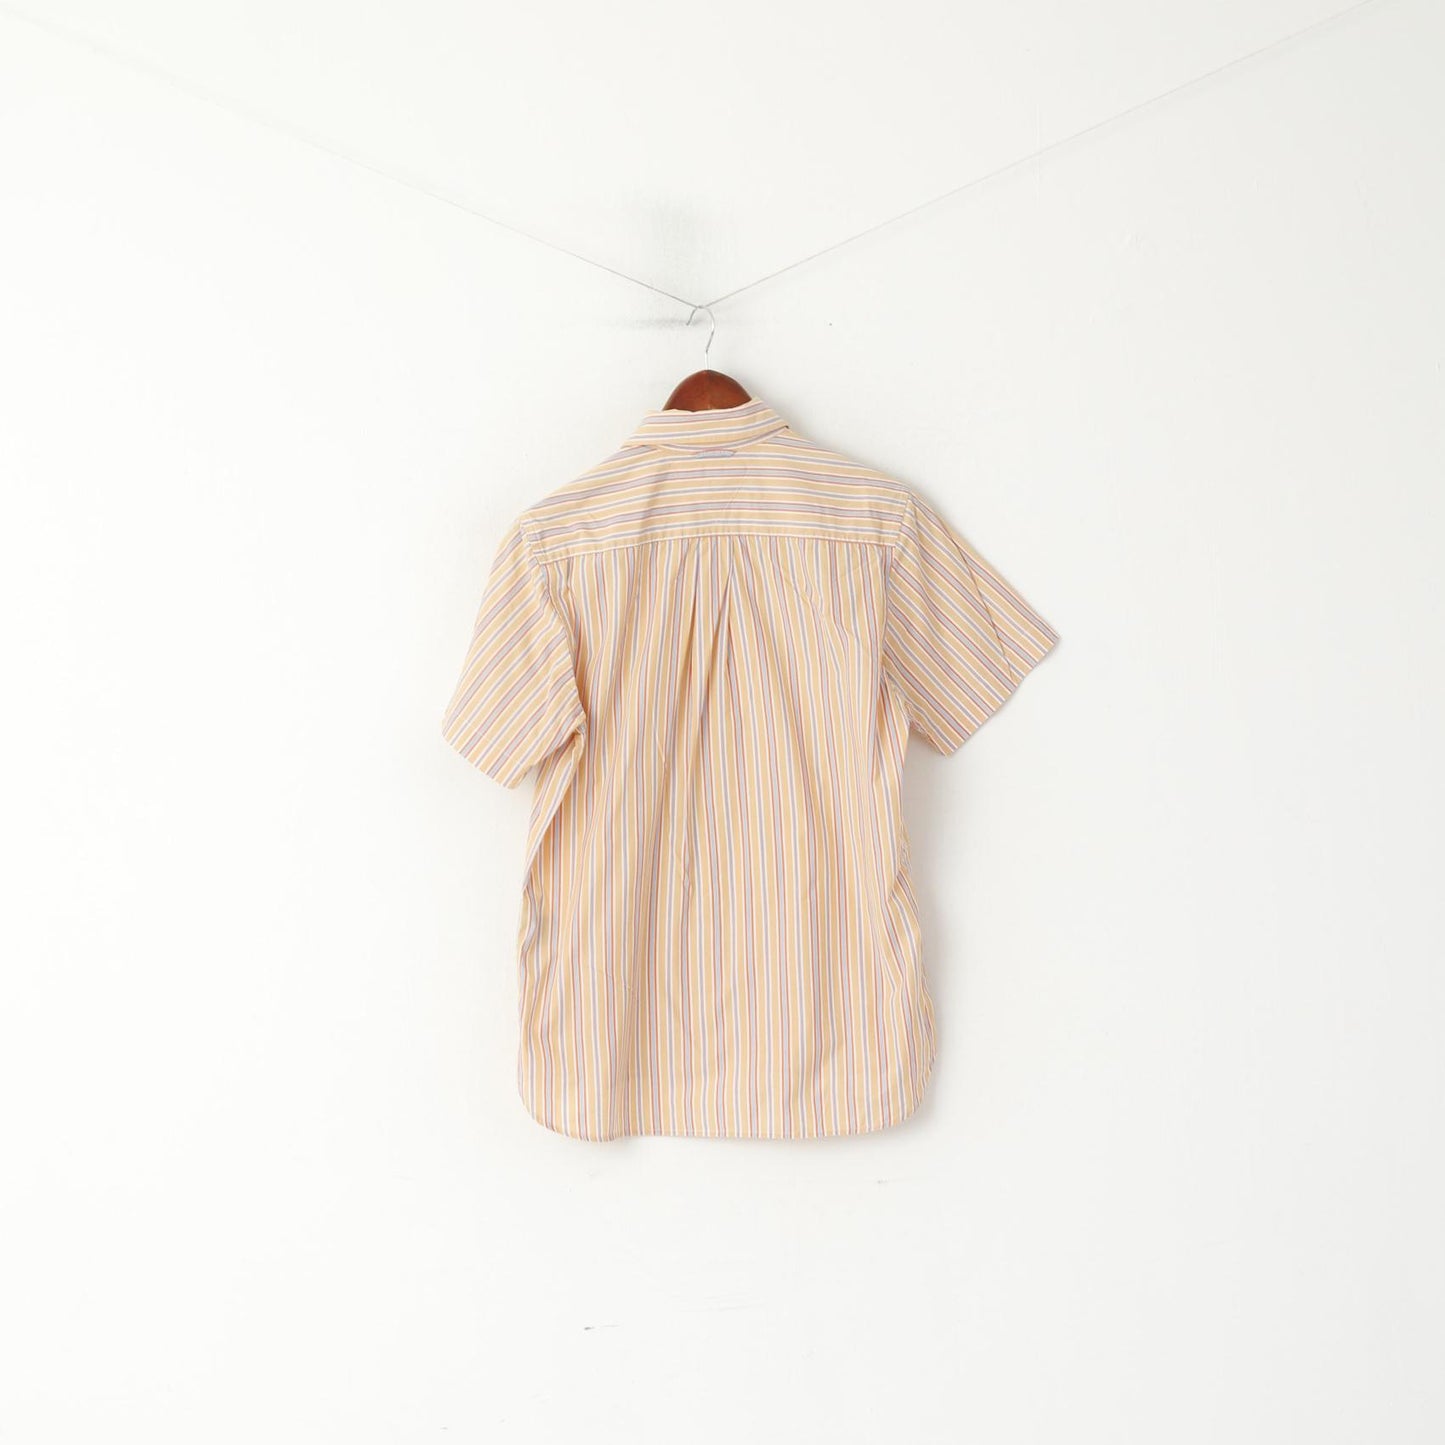 Tommy Hilfiger Men S Casual Shirt Orange Striped Cotton Short Sleeve Top